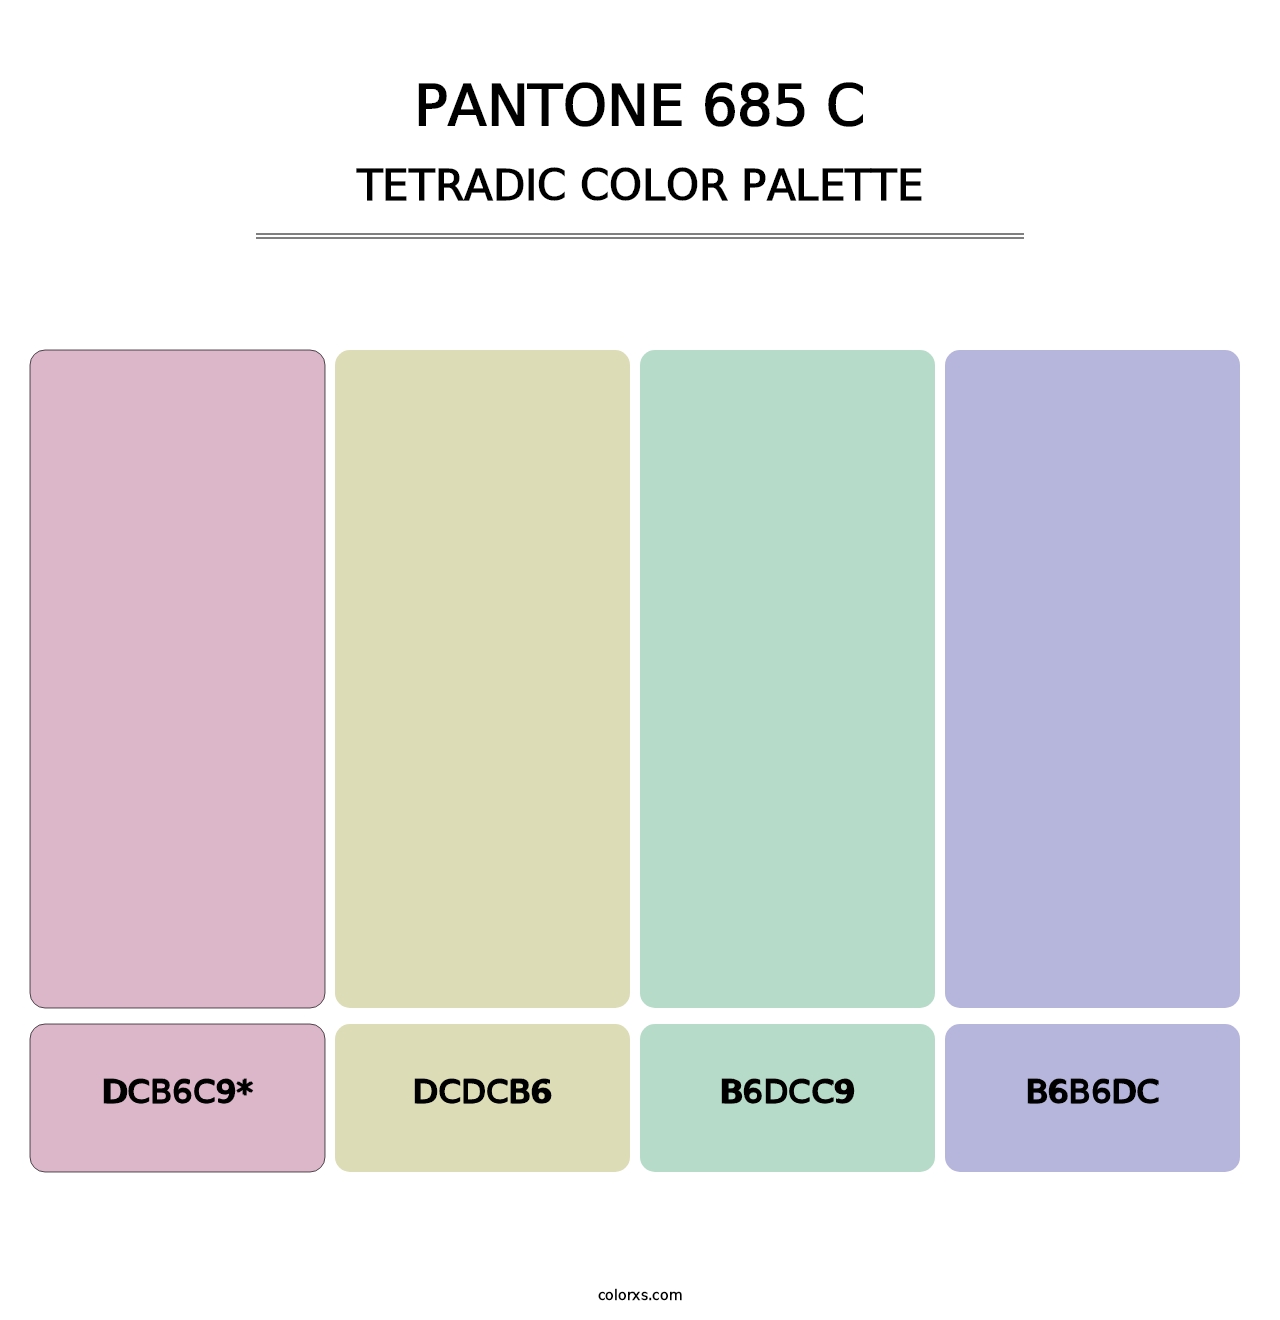 PANTONE 685 C - Tetradic Color Palette